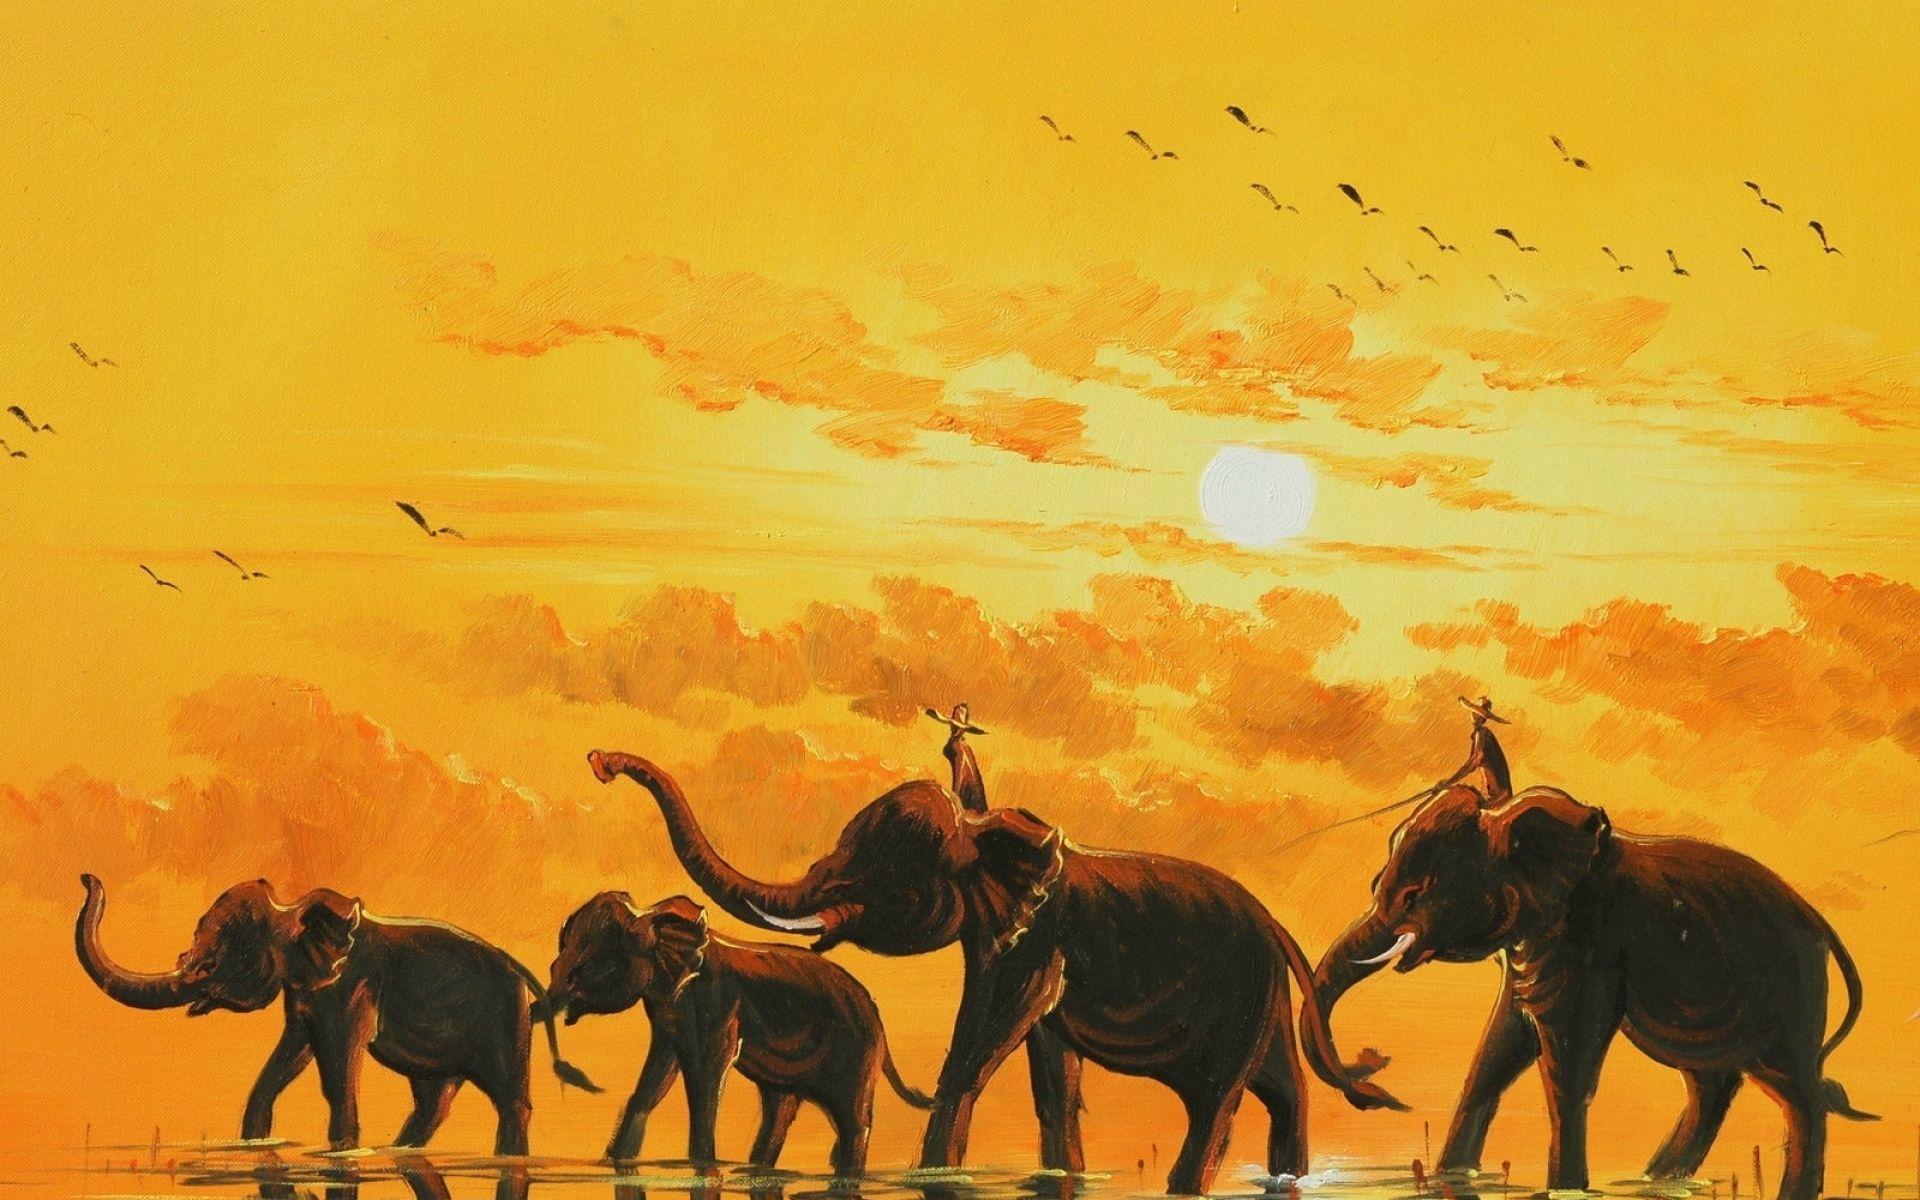 Art Wallpaper Paintings Elephant Wallpaper Artistic 1920×1200. my